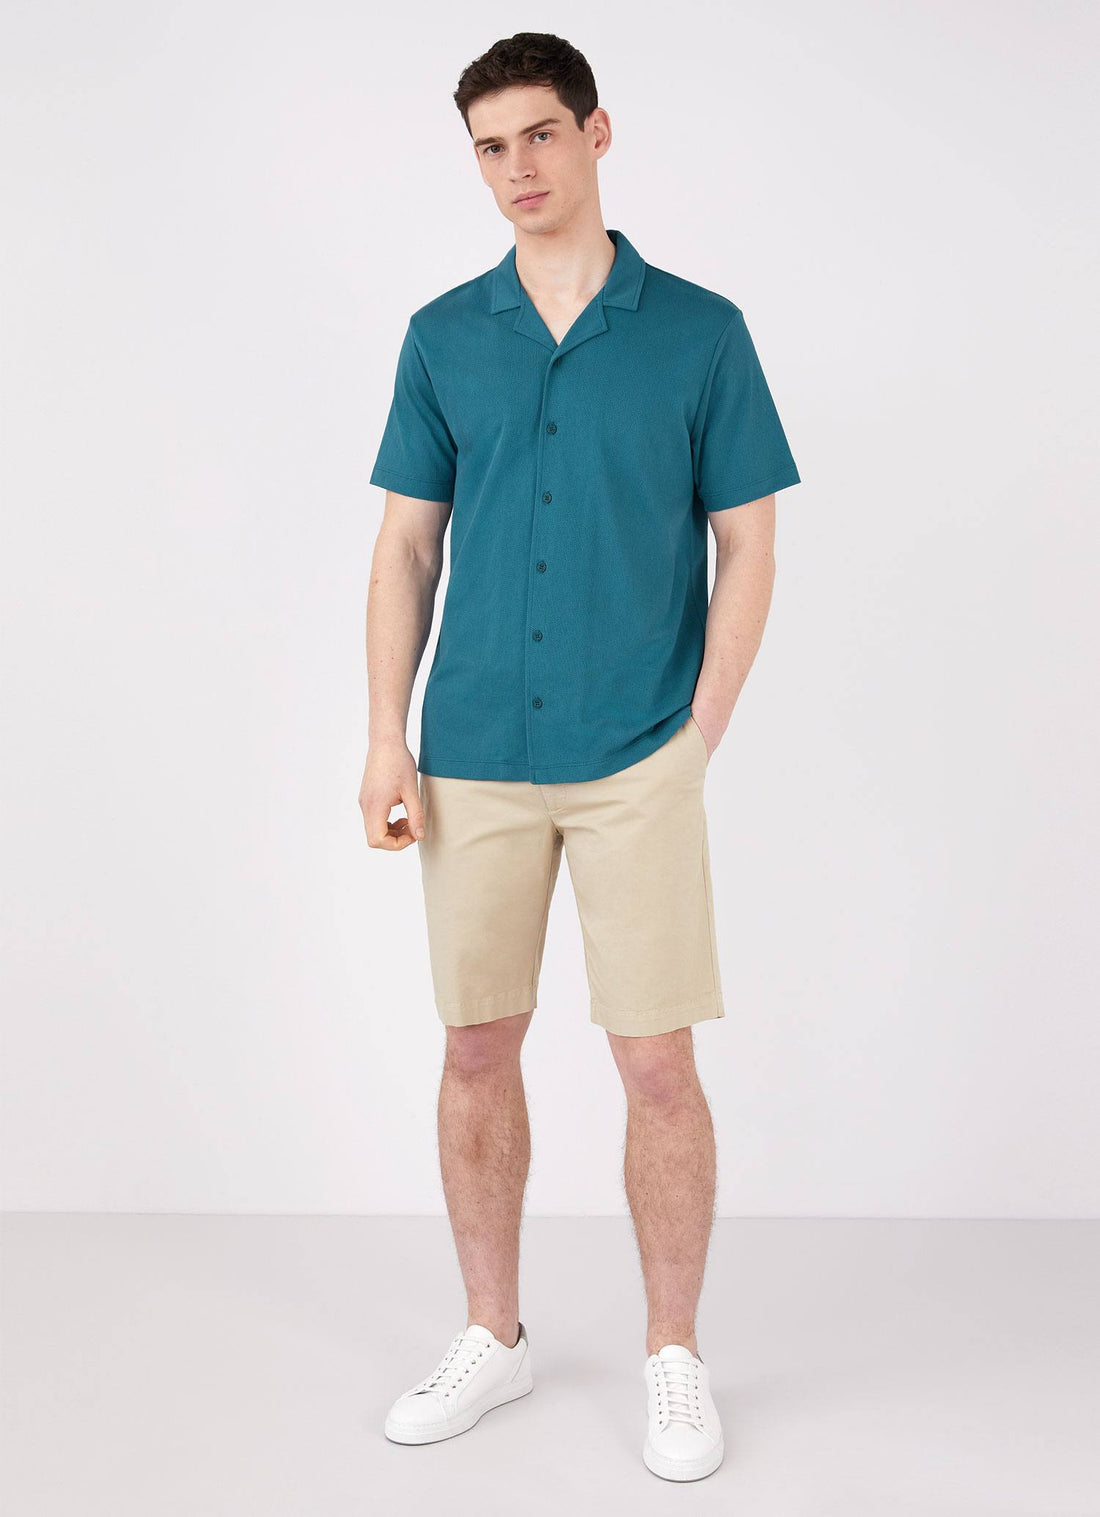 Men's Riviera Camp Collar Shirt in Lagoon Blue